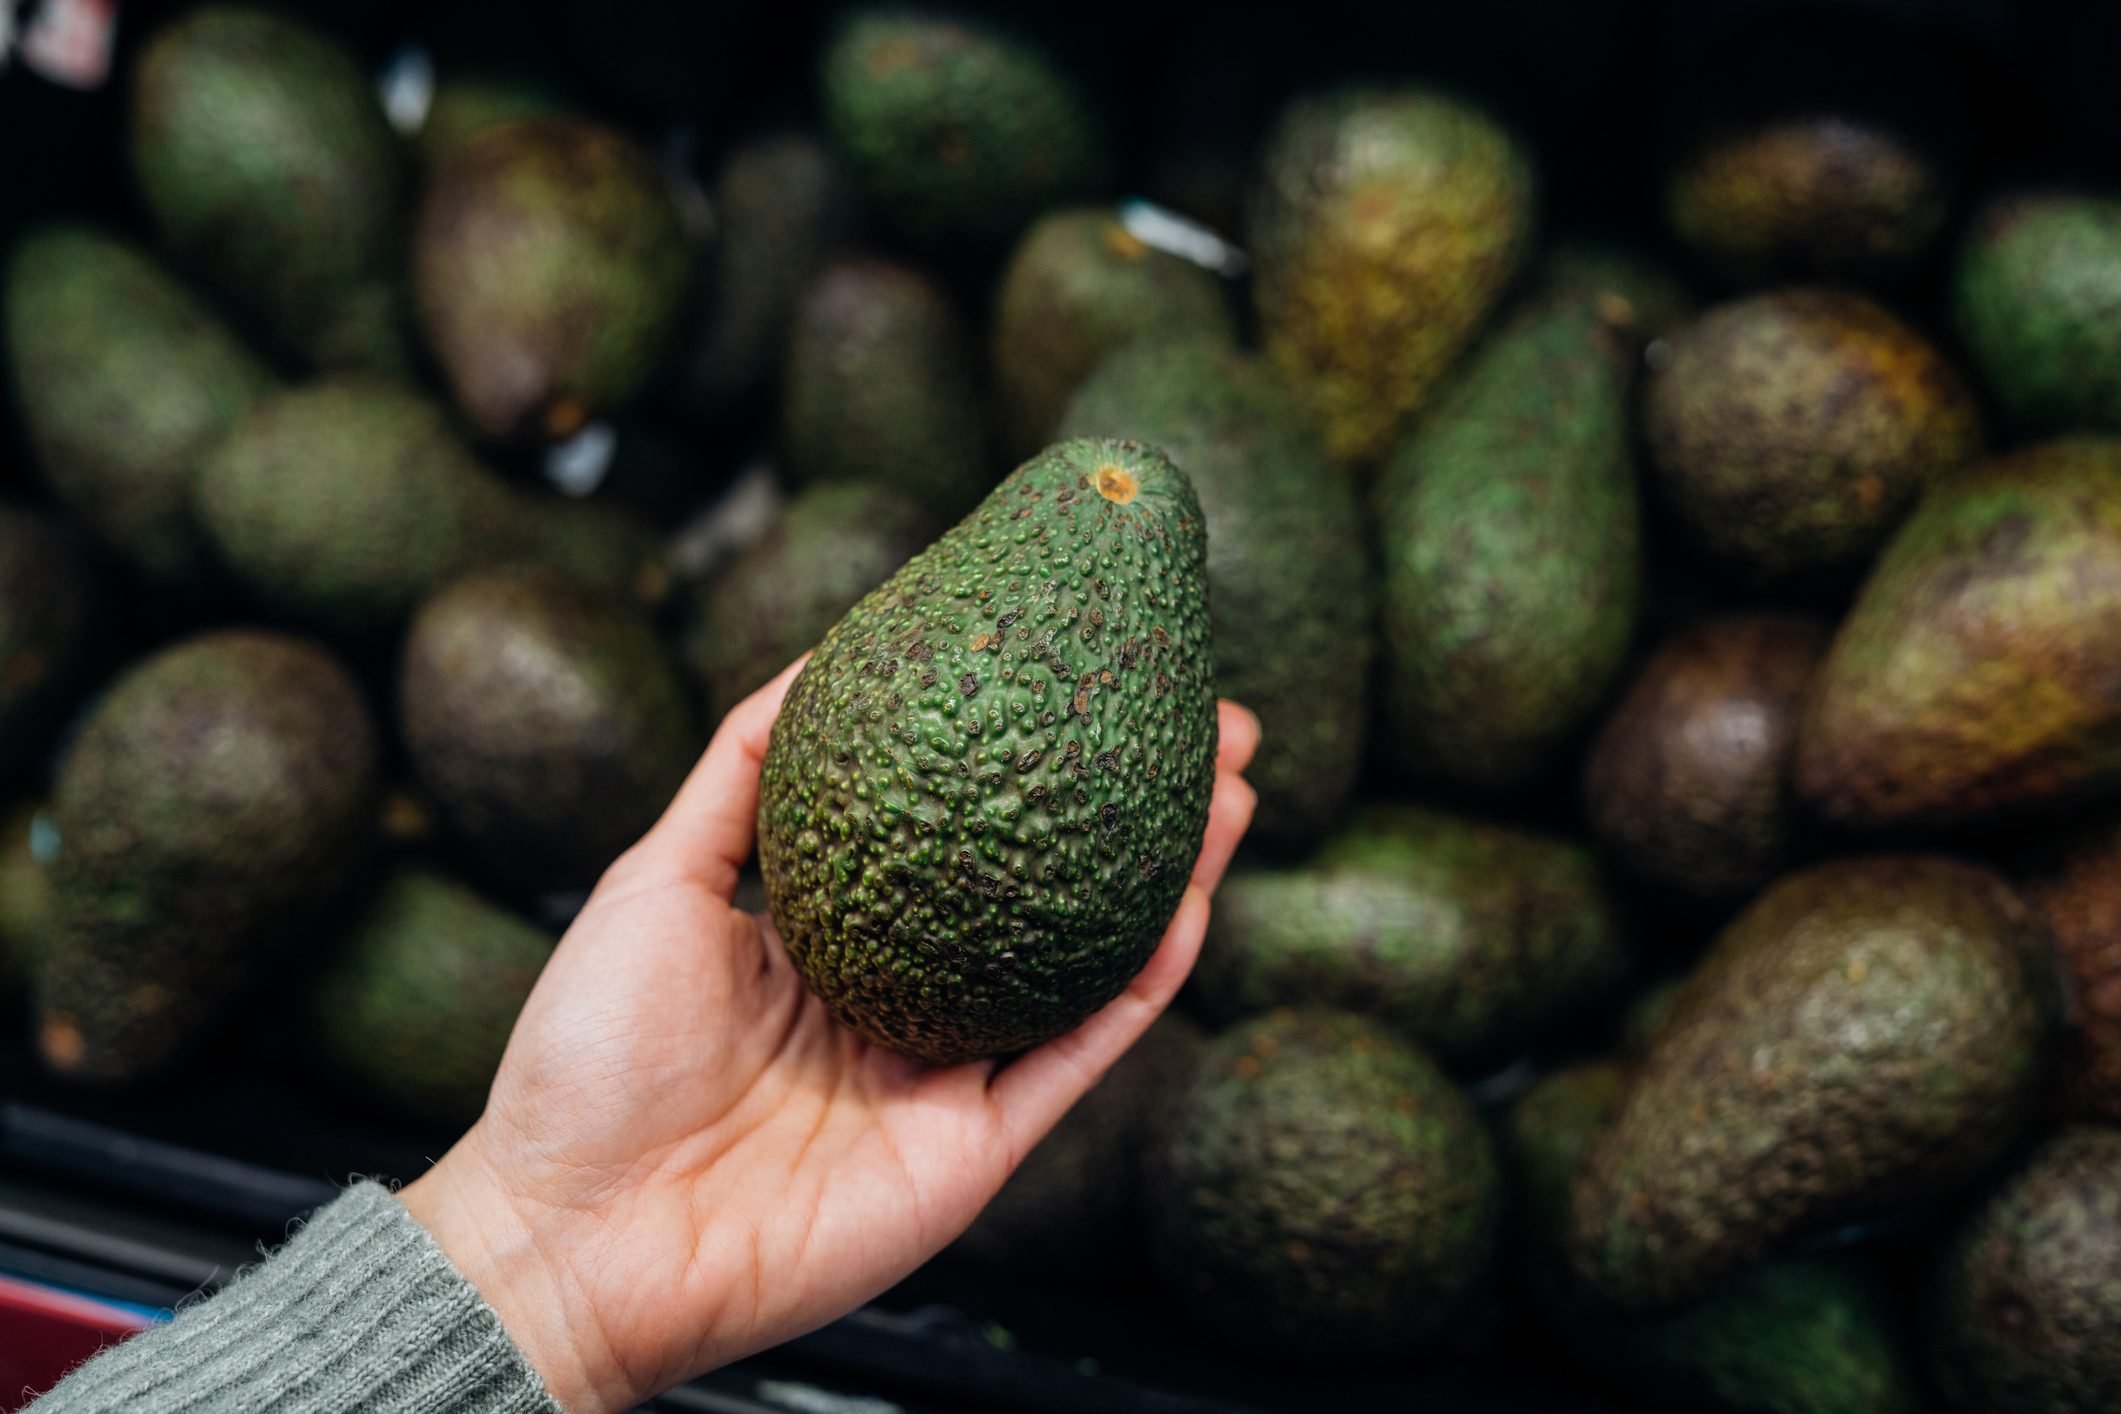 How to cut an avocado